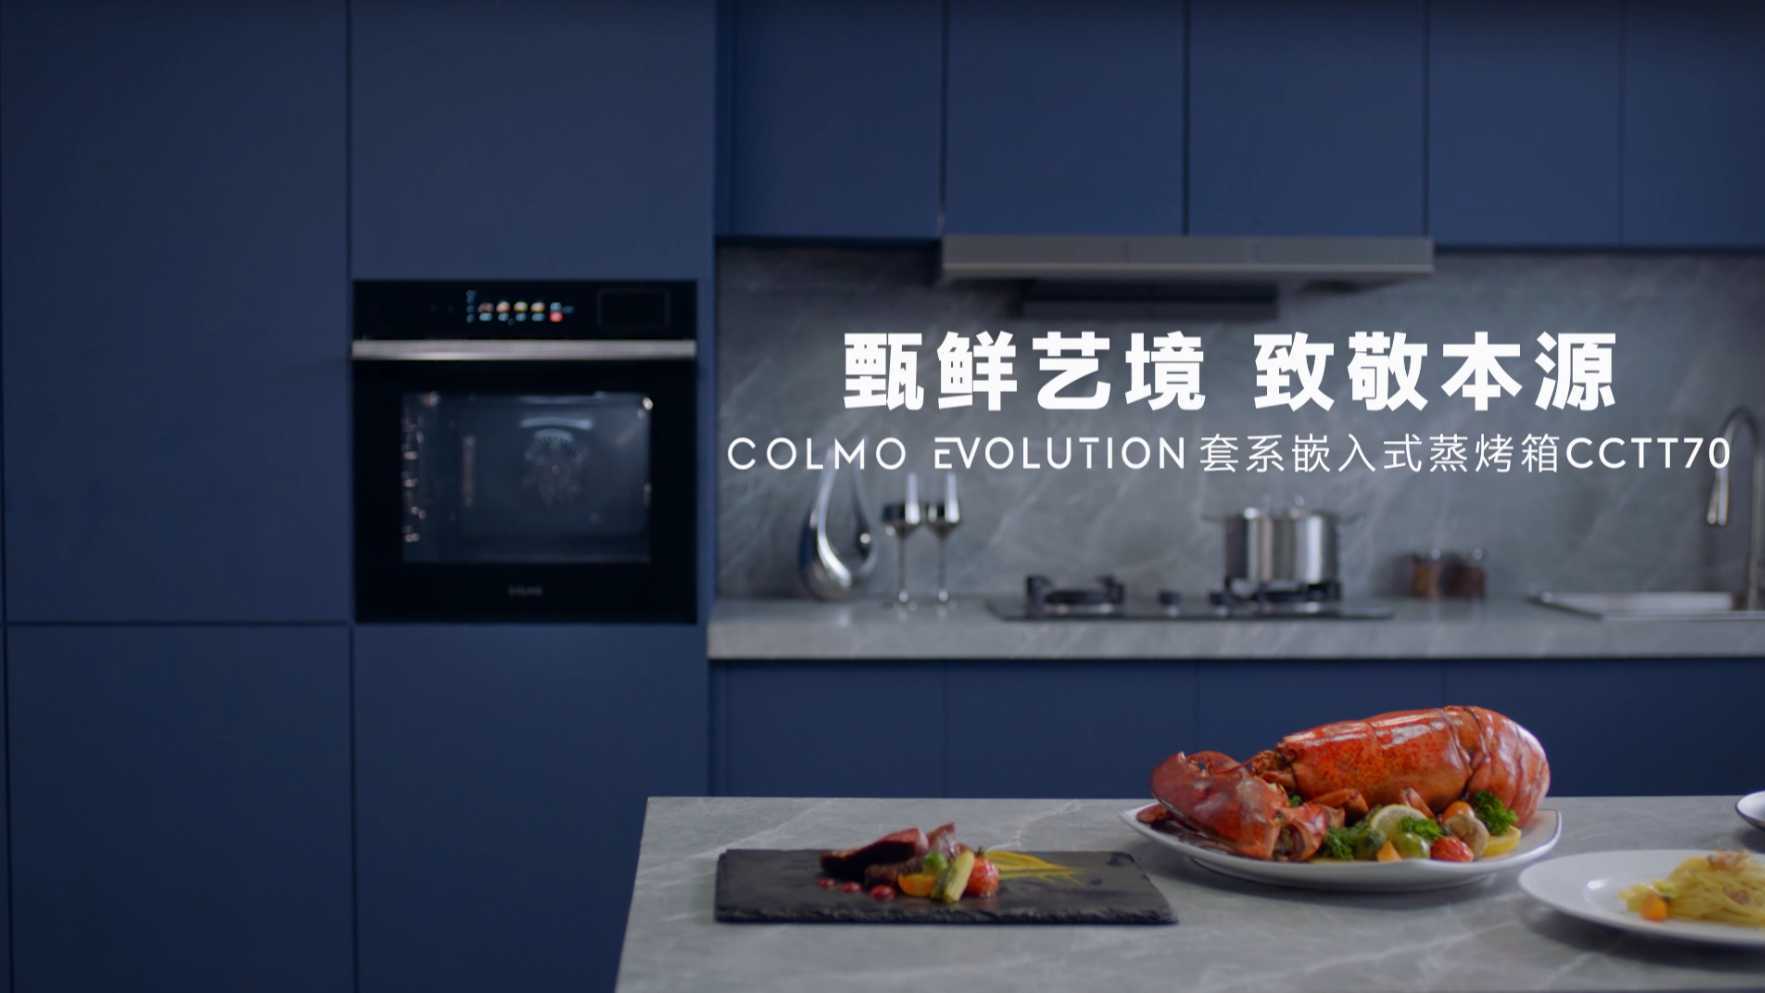 COLMO EVOLUTION套系嵌入式蒸烤箱CCTT70